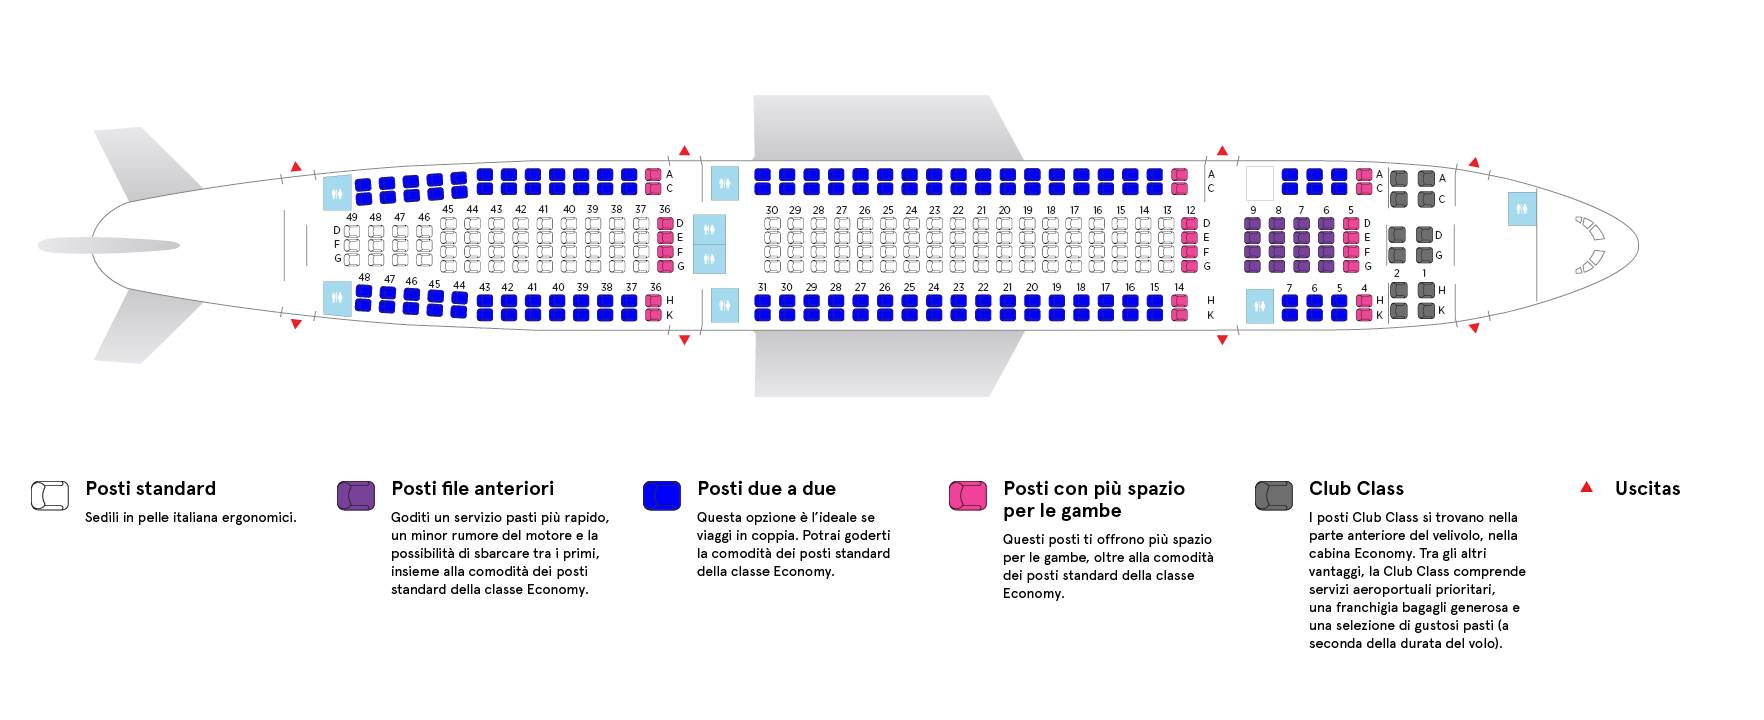 Cabina aereo Air Transat Airbus A330-200 Low Density